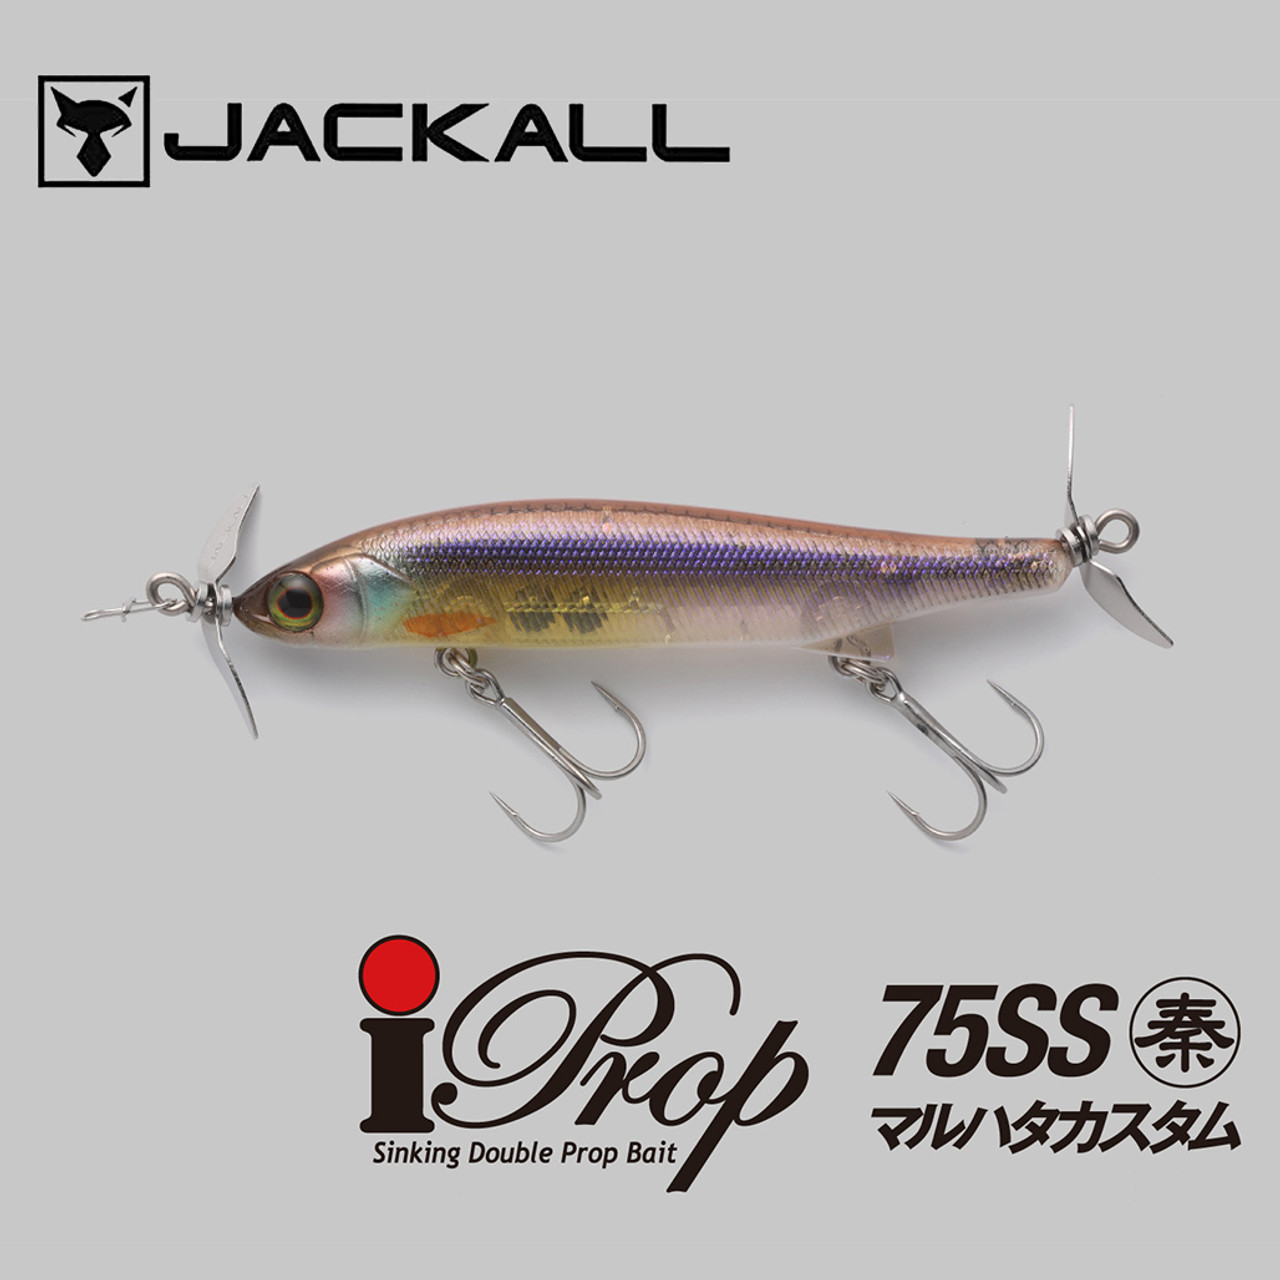 Cheap Jackall I-Prop 75SS Maruhata Custom Sinking Lure Maruhata Clear Pink  (3959)